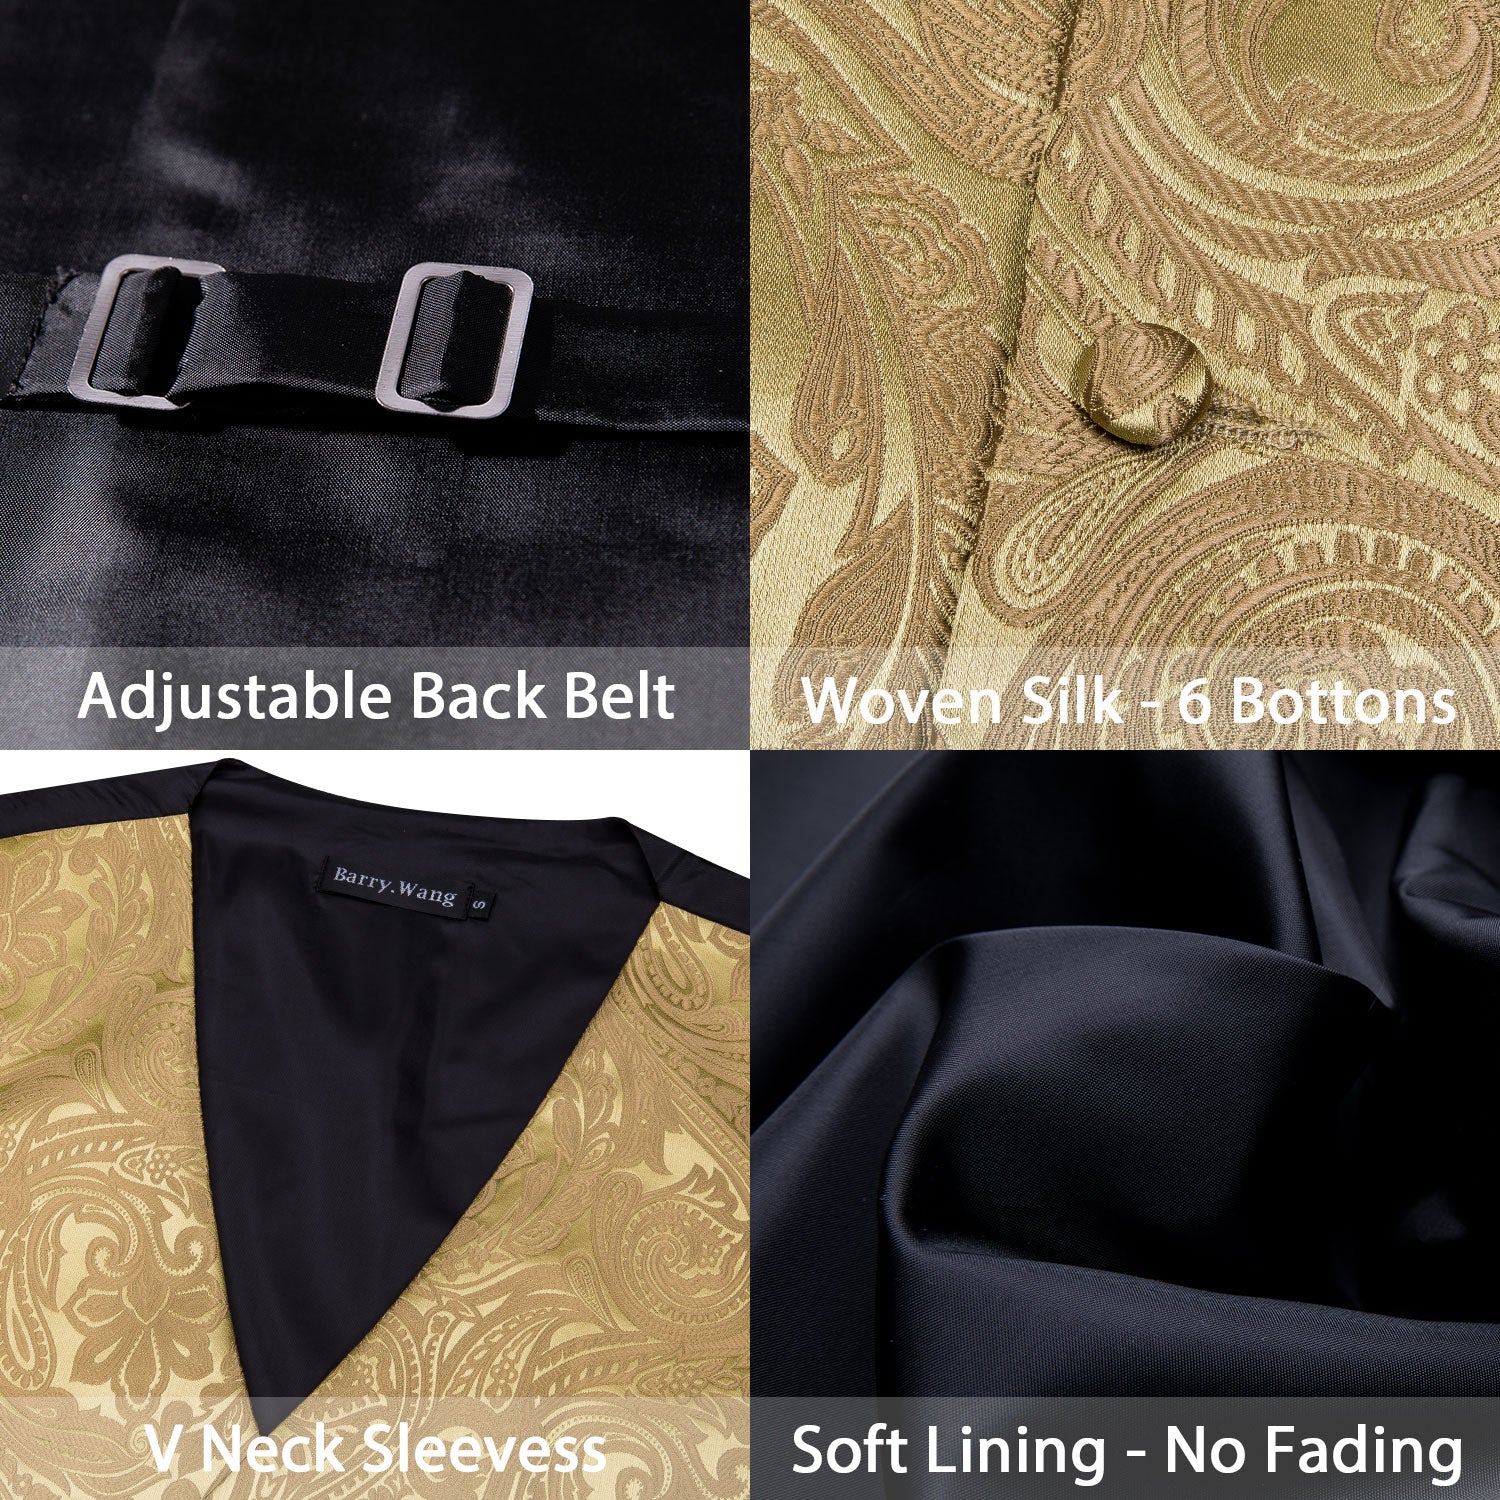 Barry Wang Men's Gold V Neck Vest Tie Handkerchief Cufflink Set